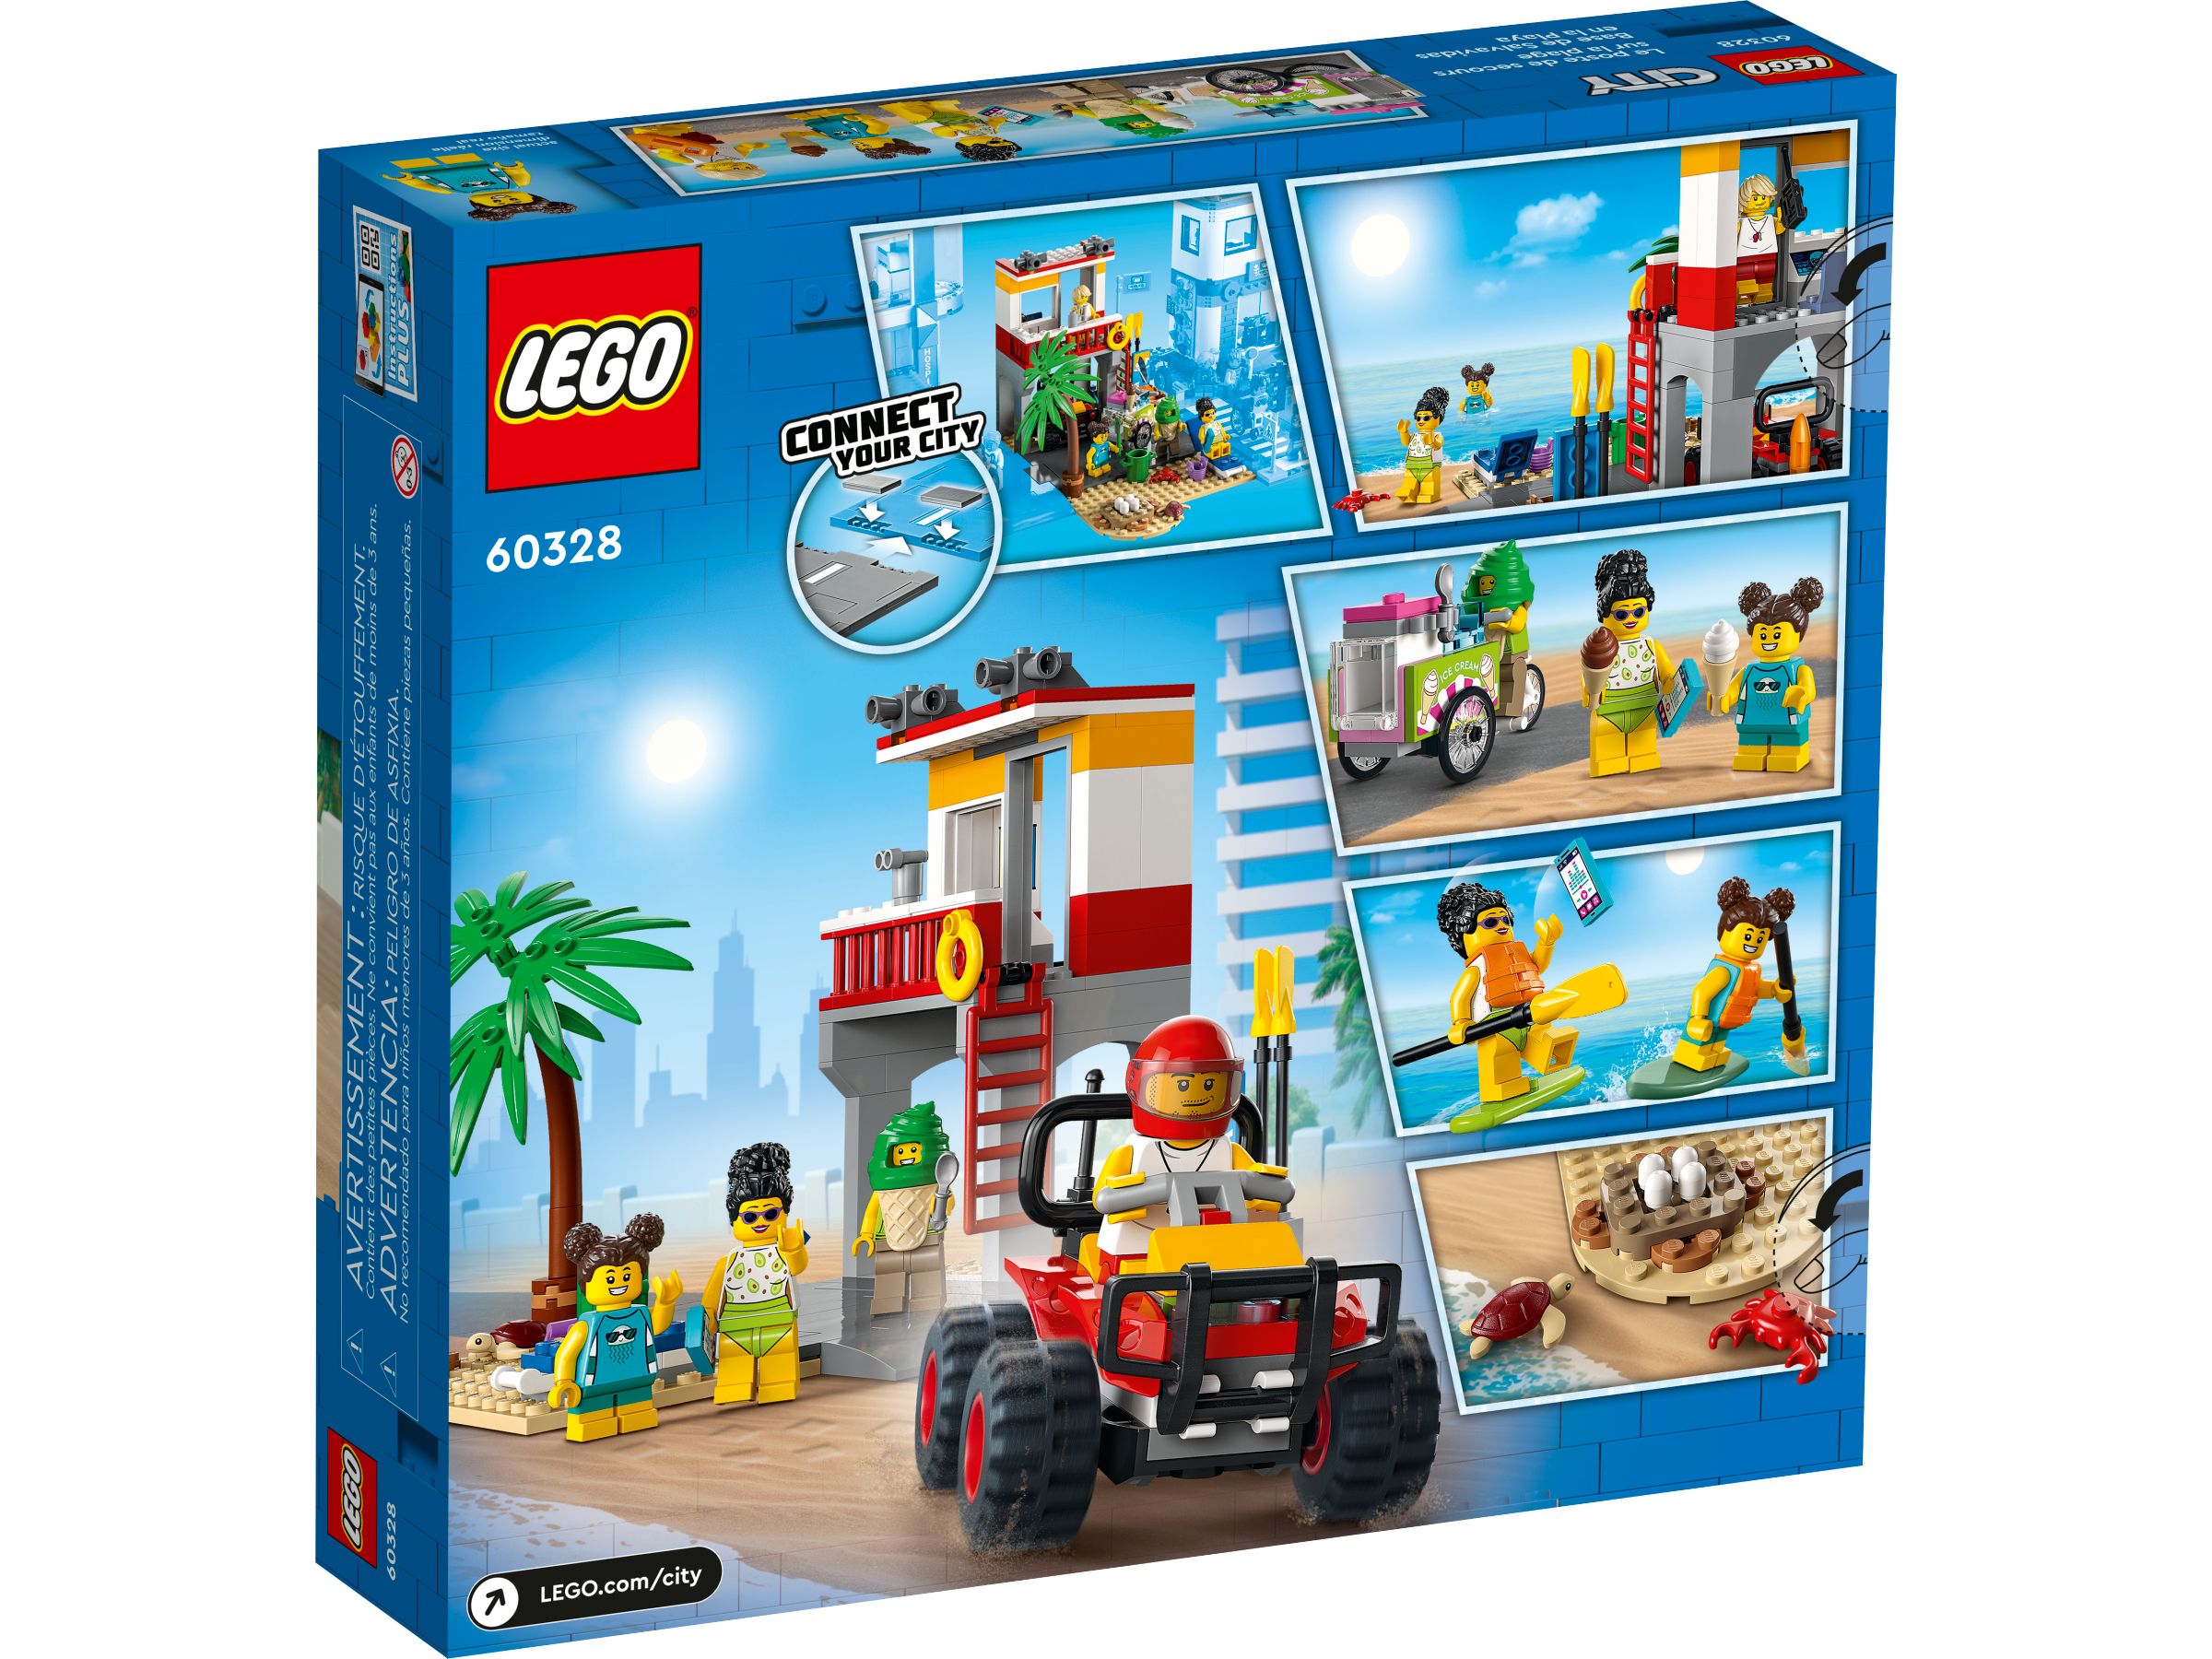 LEGO City 60328 Rettungsschwimmer-Station LEGO_60328_alt7.jpg